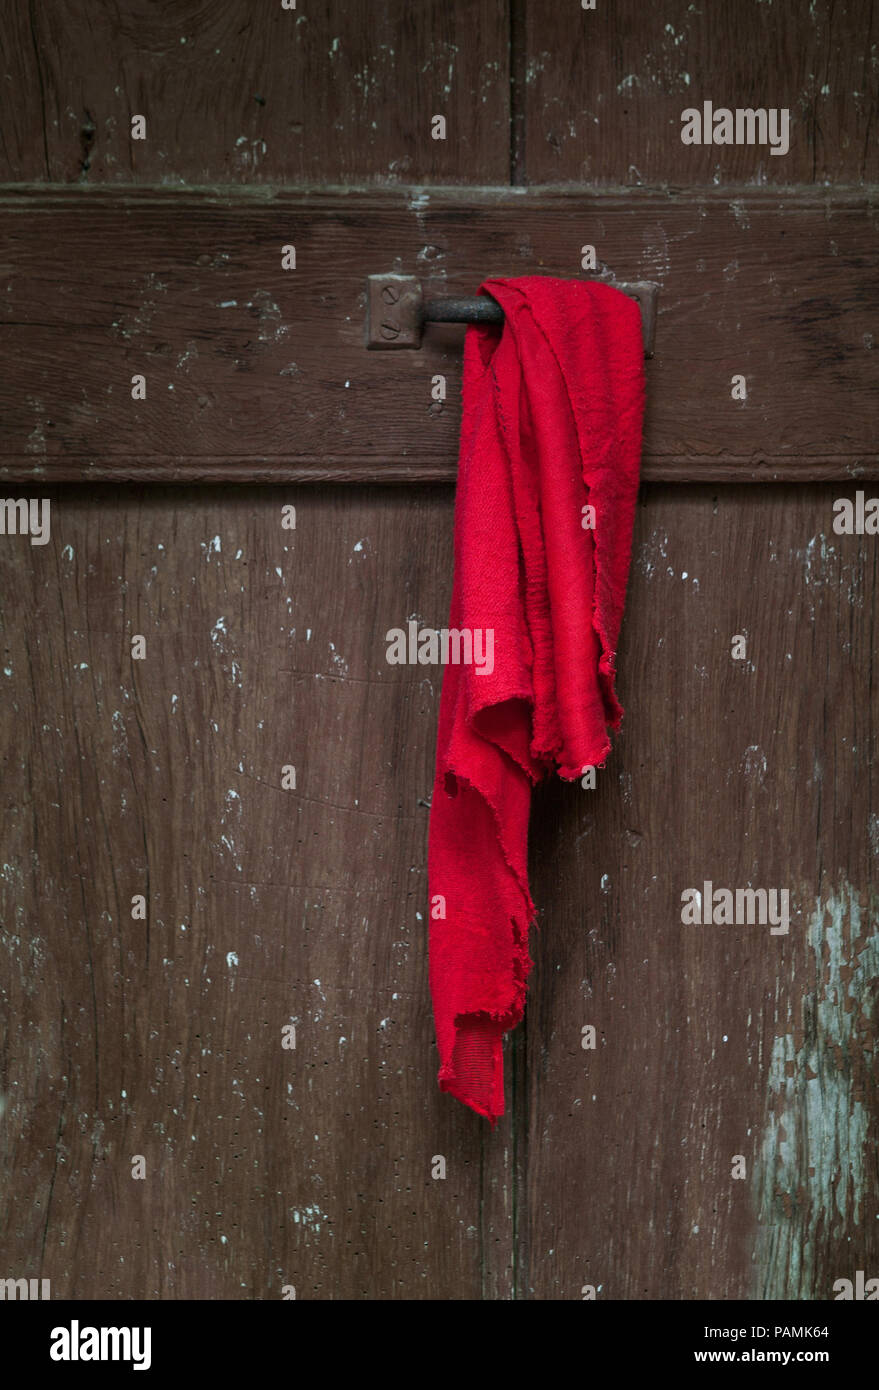 rag on Stock Photo - Alamy